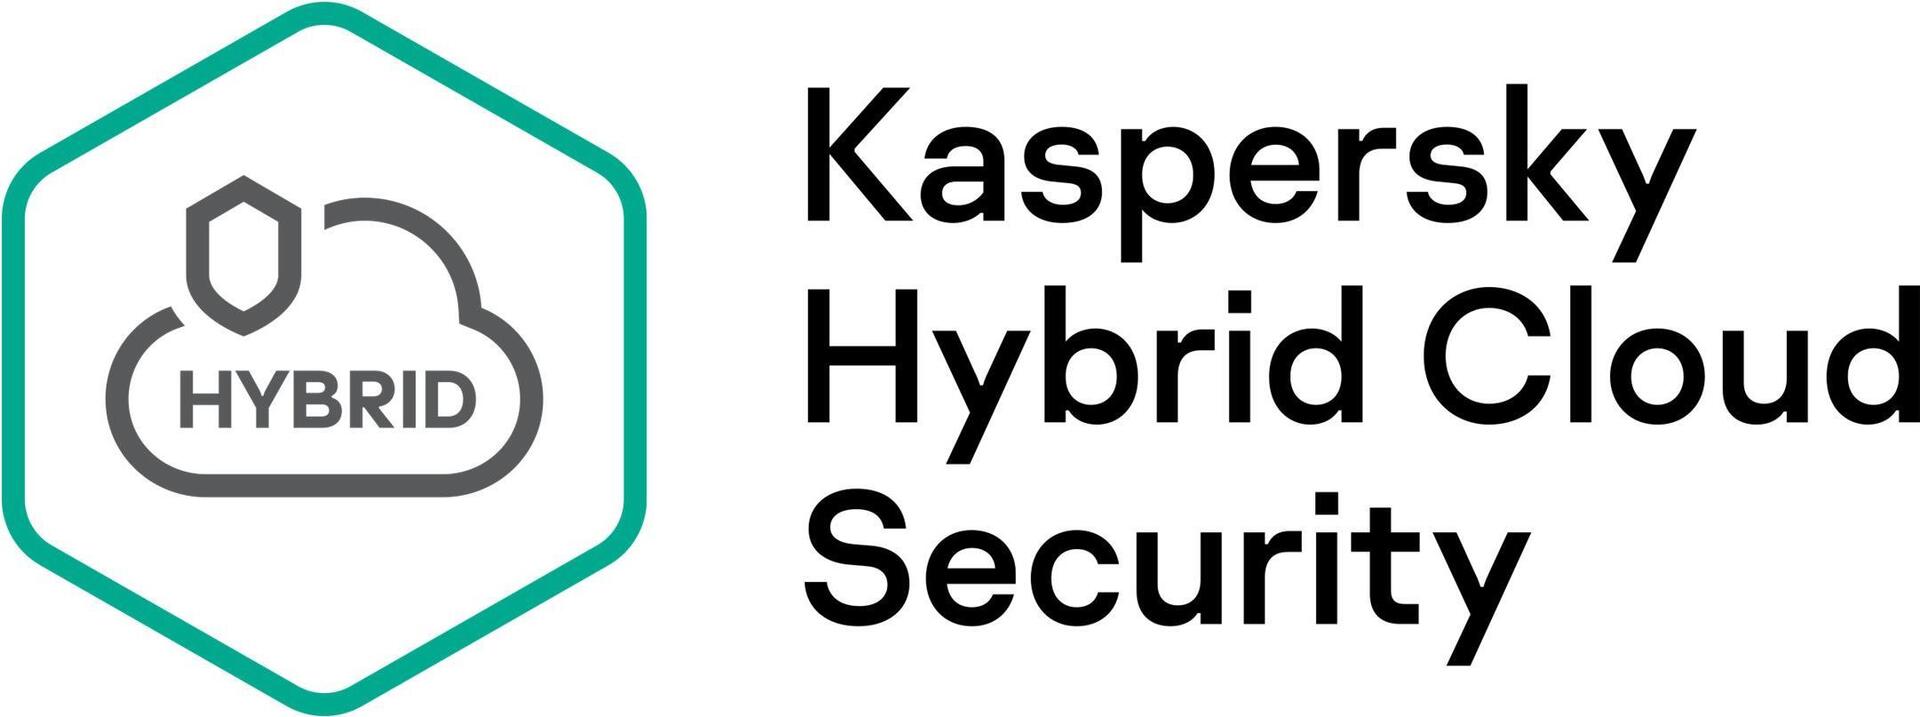 Kaspersky Hybrid Cloud Security (KL4554XAKD8)